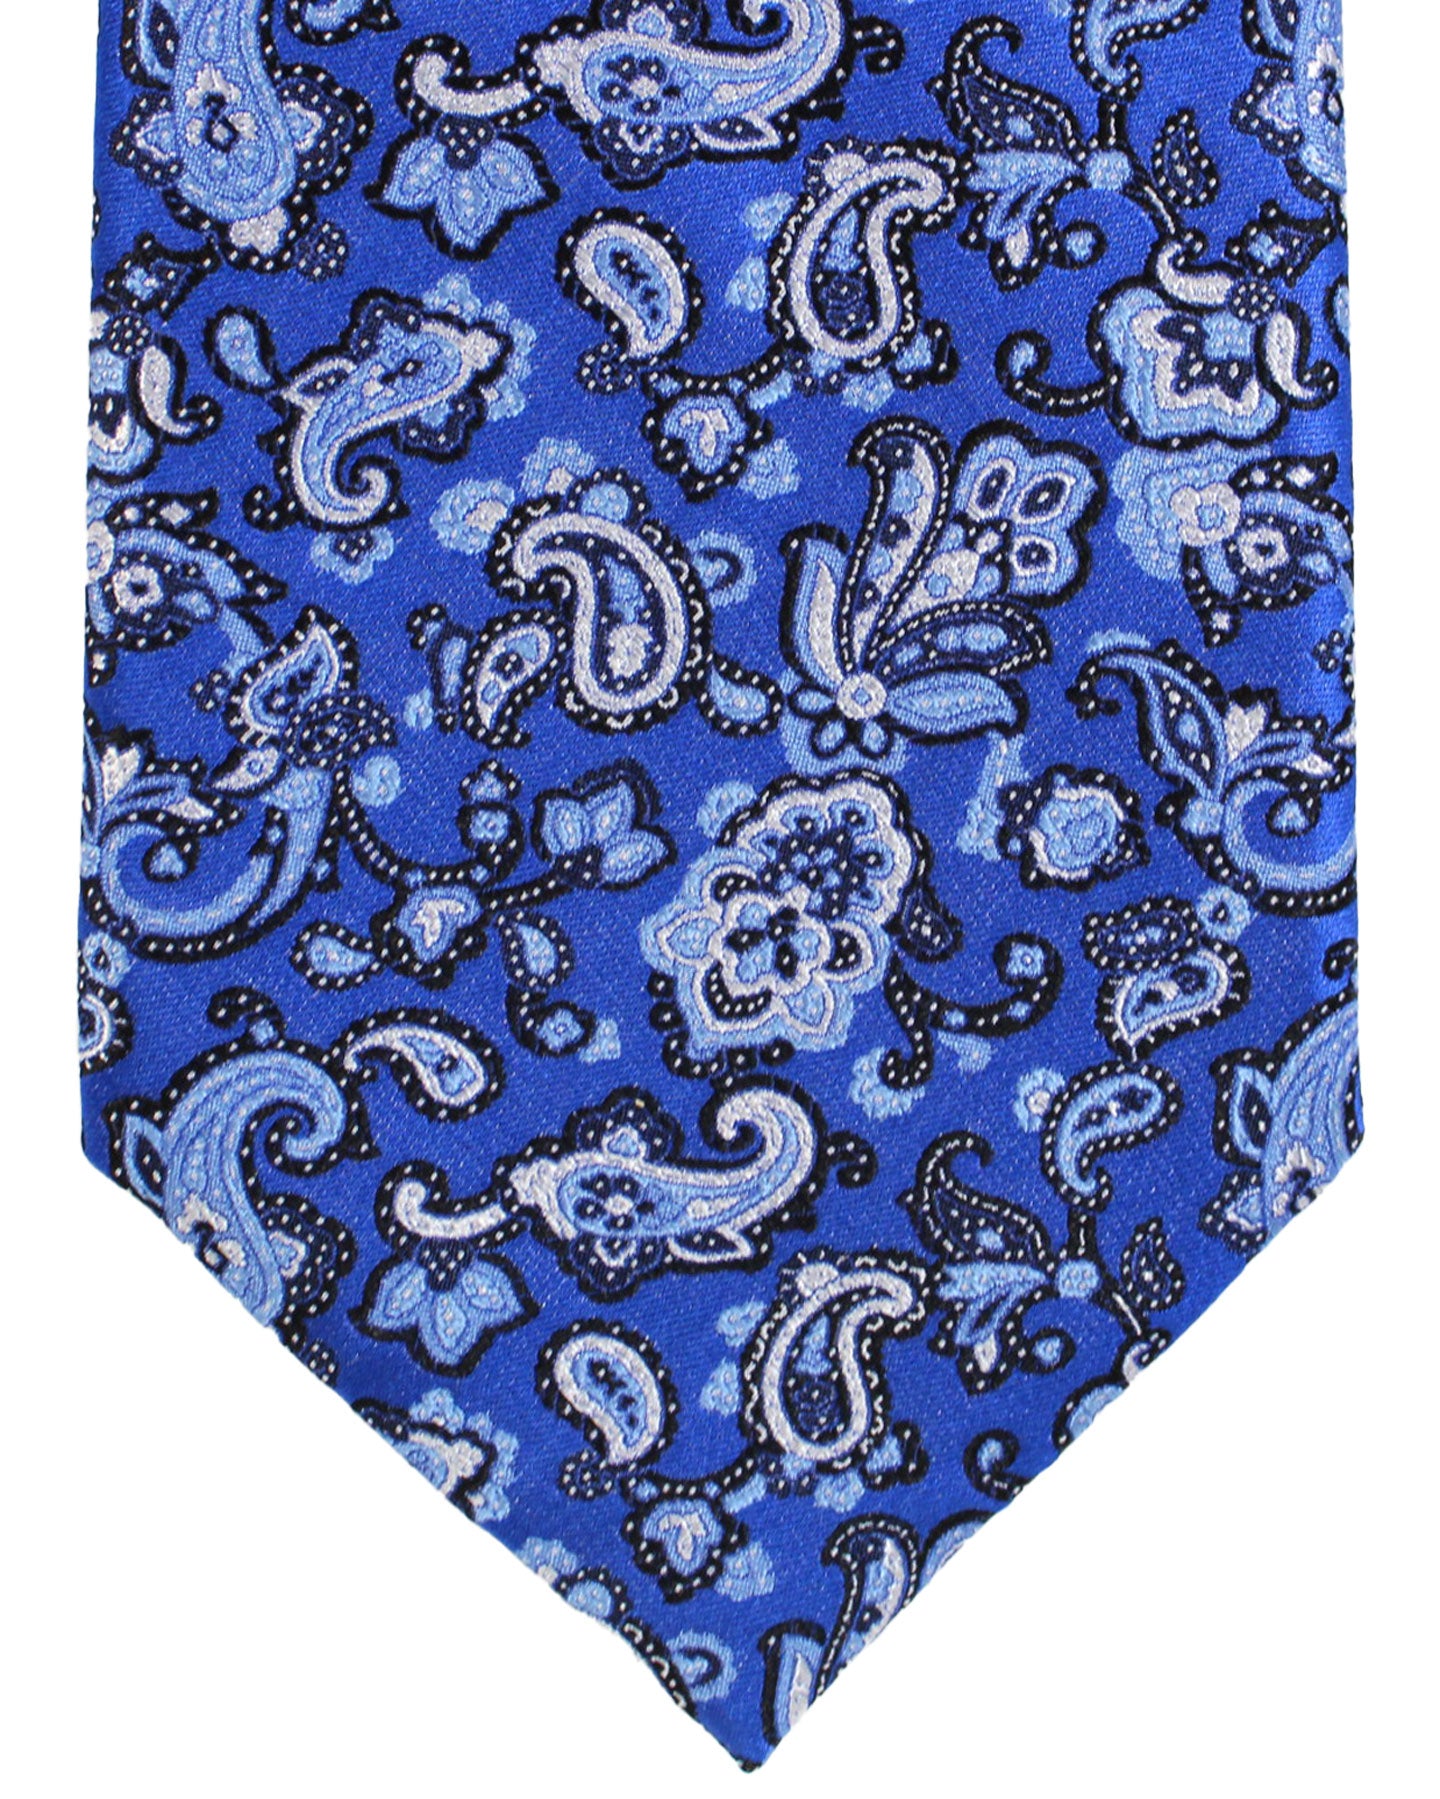 Stefano Ricci Silk Tie Dark Blue Paisley